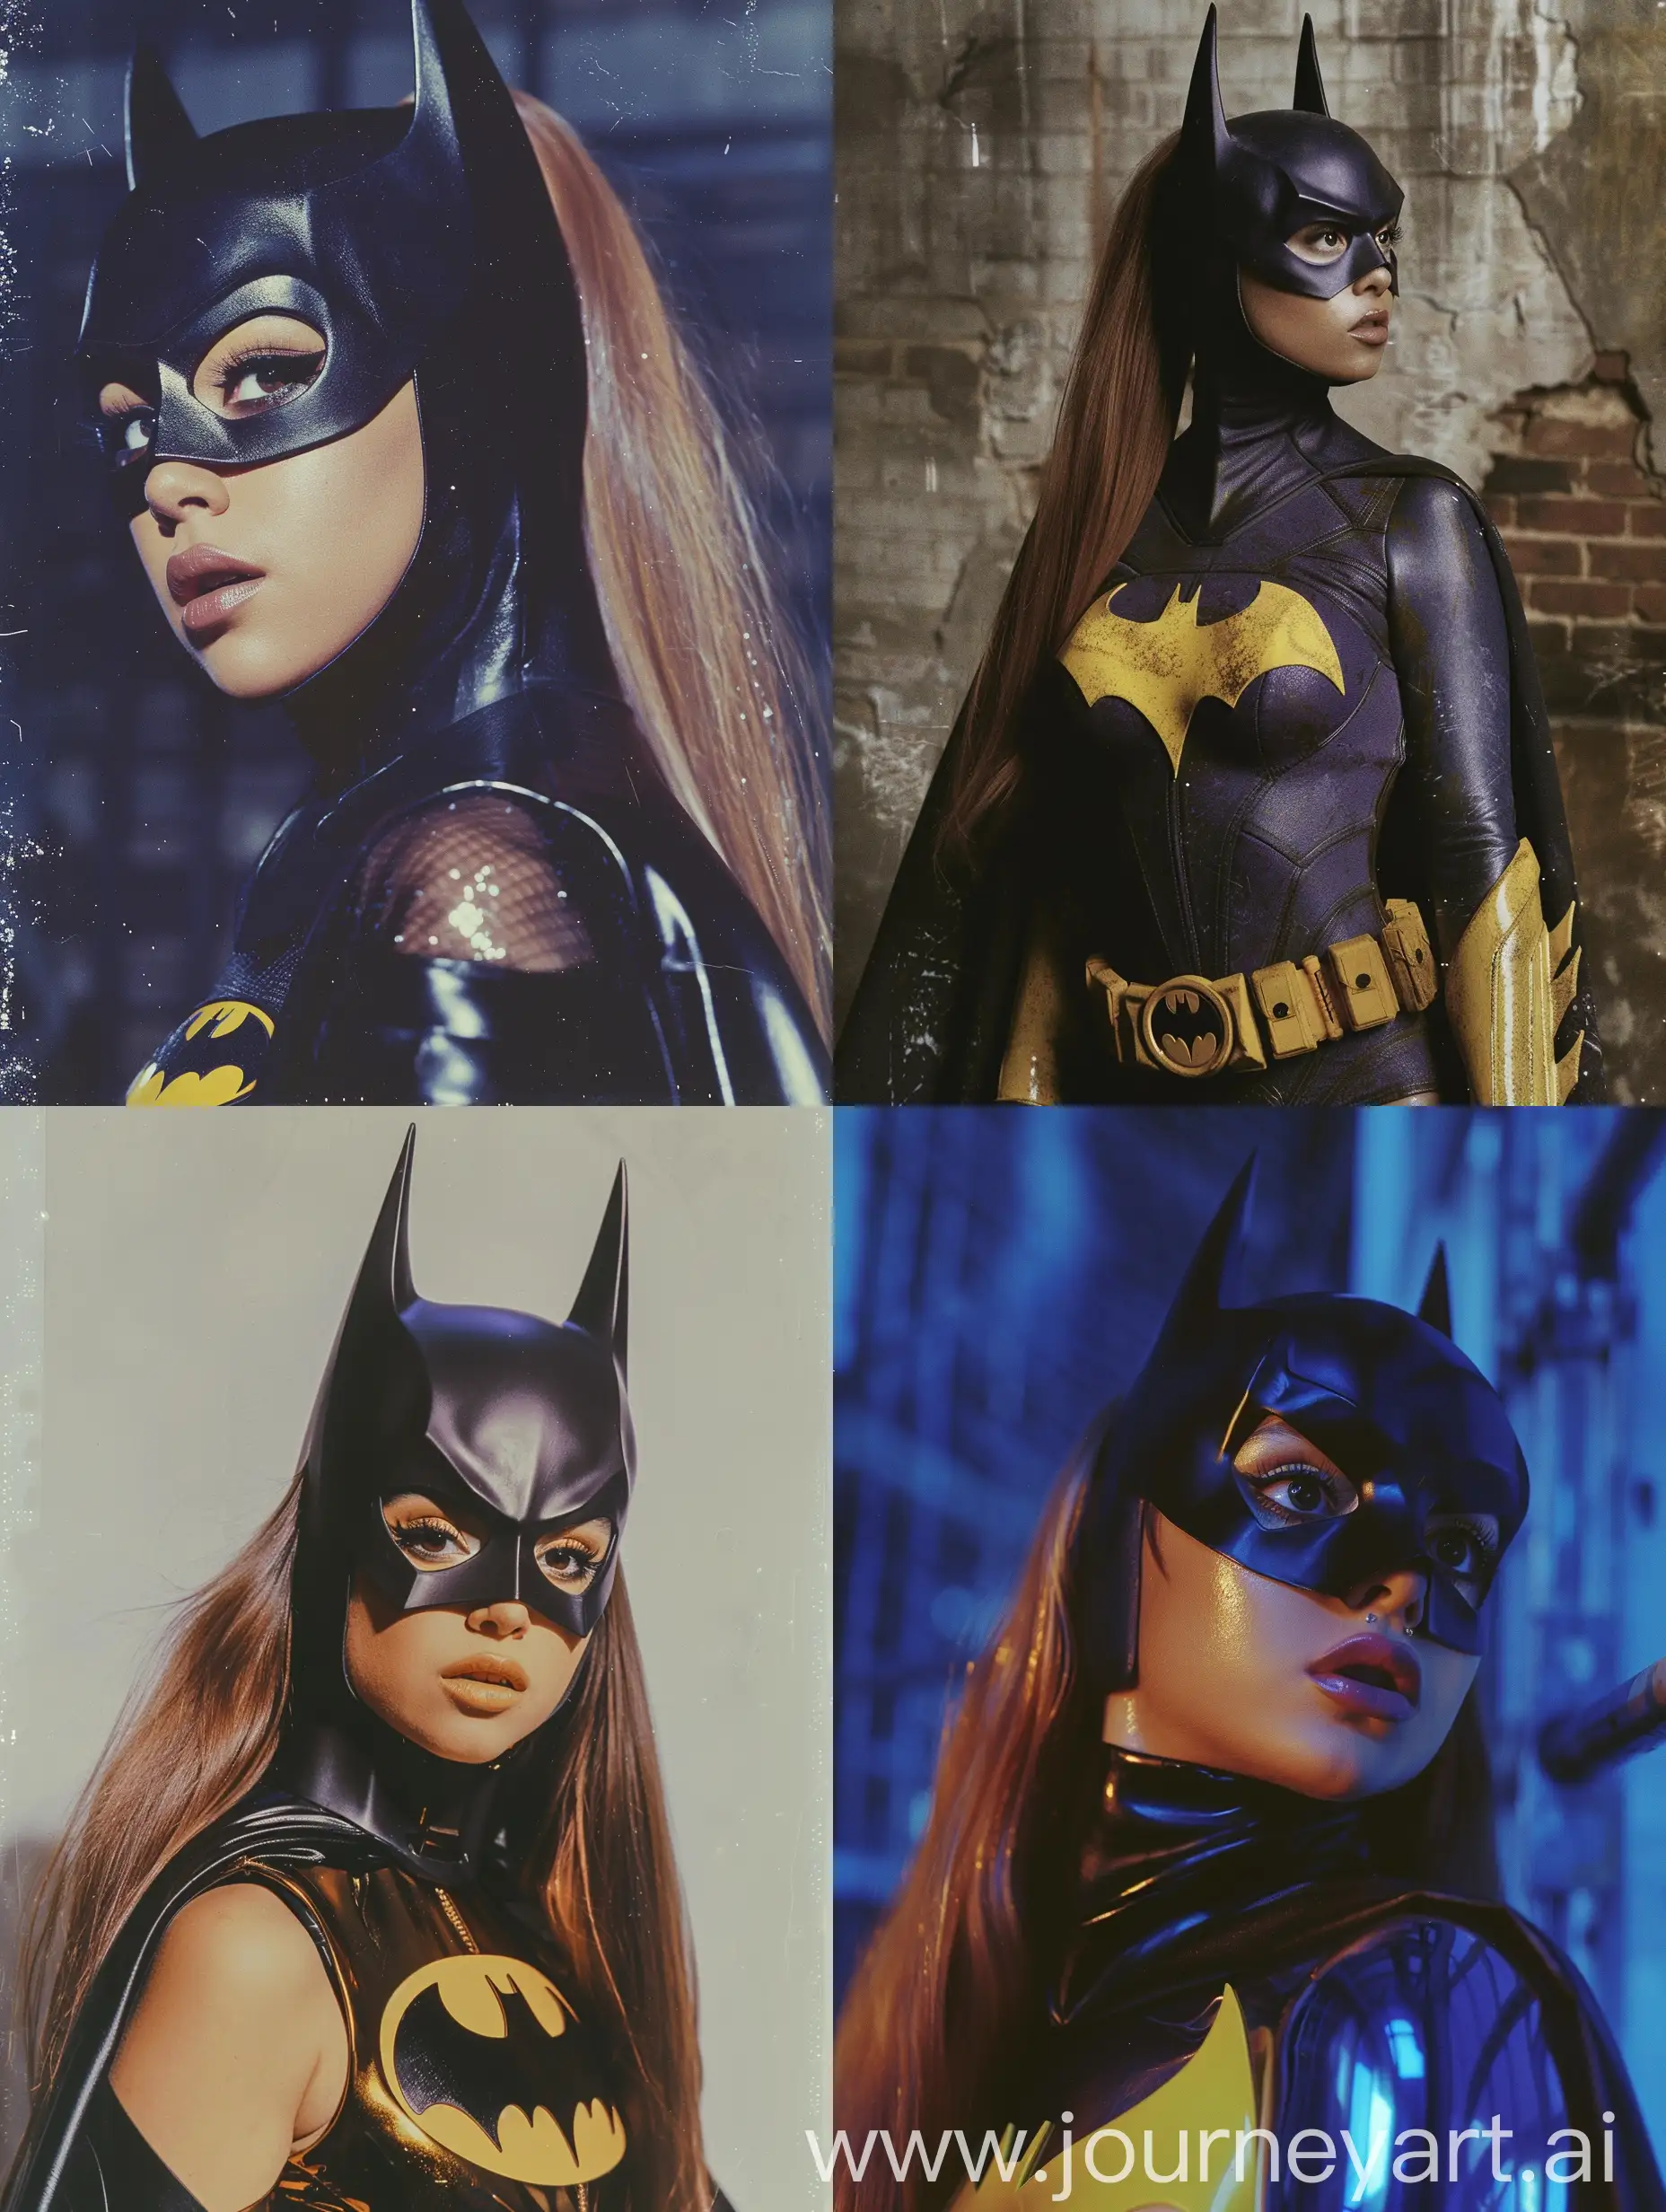 Ariana-Grande-as-Batgirl-VHS-Retro-Pop-Icon-Portraying-Iconic-Superheroine